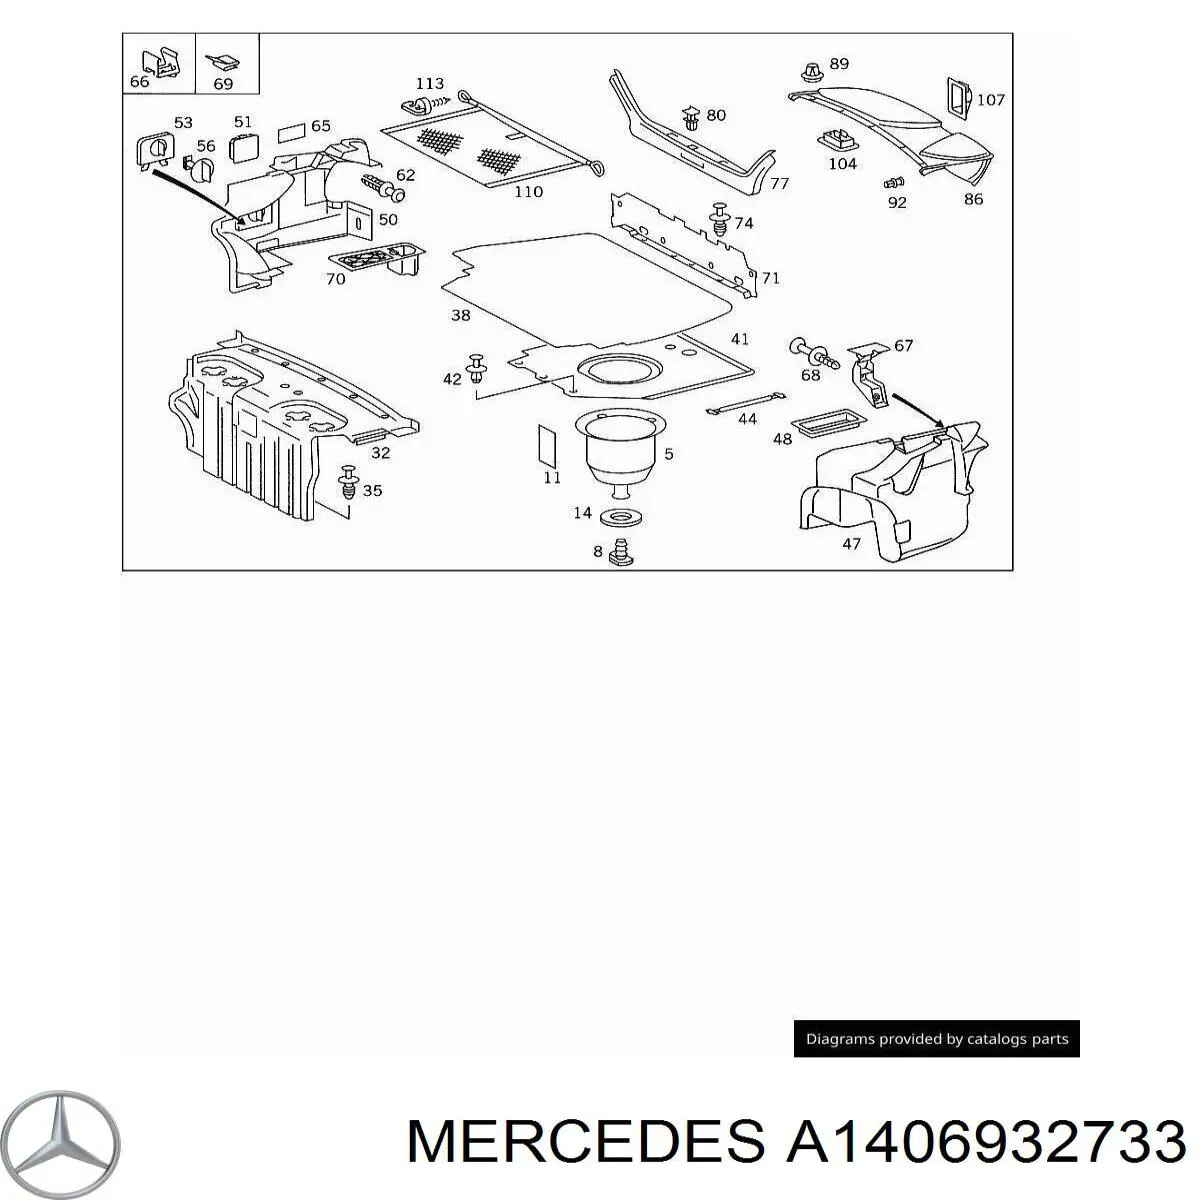 A1406932733 Mercedes